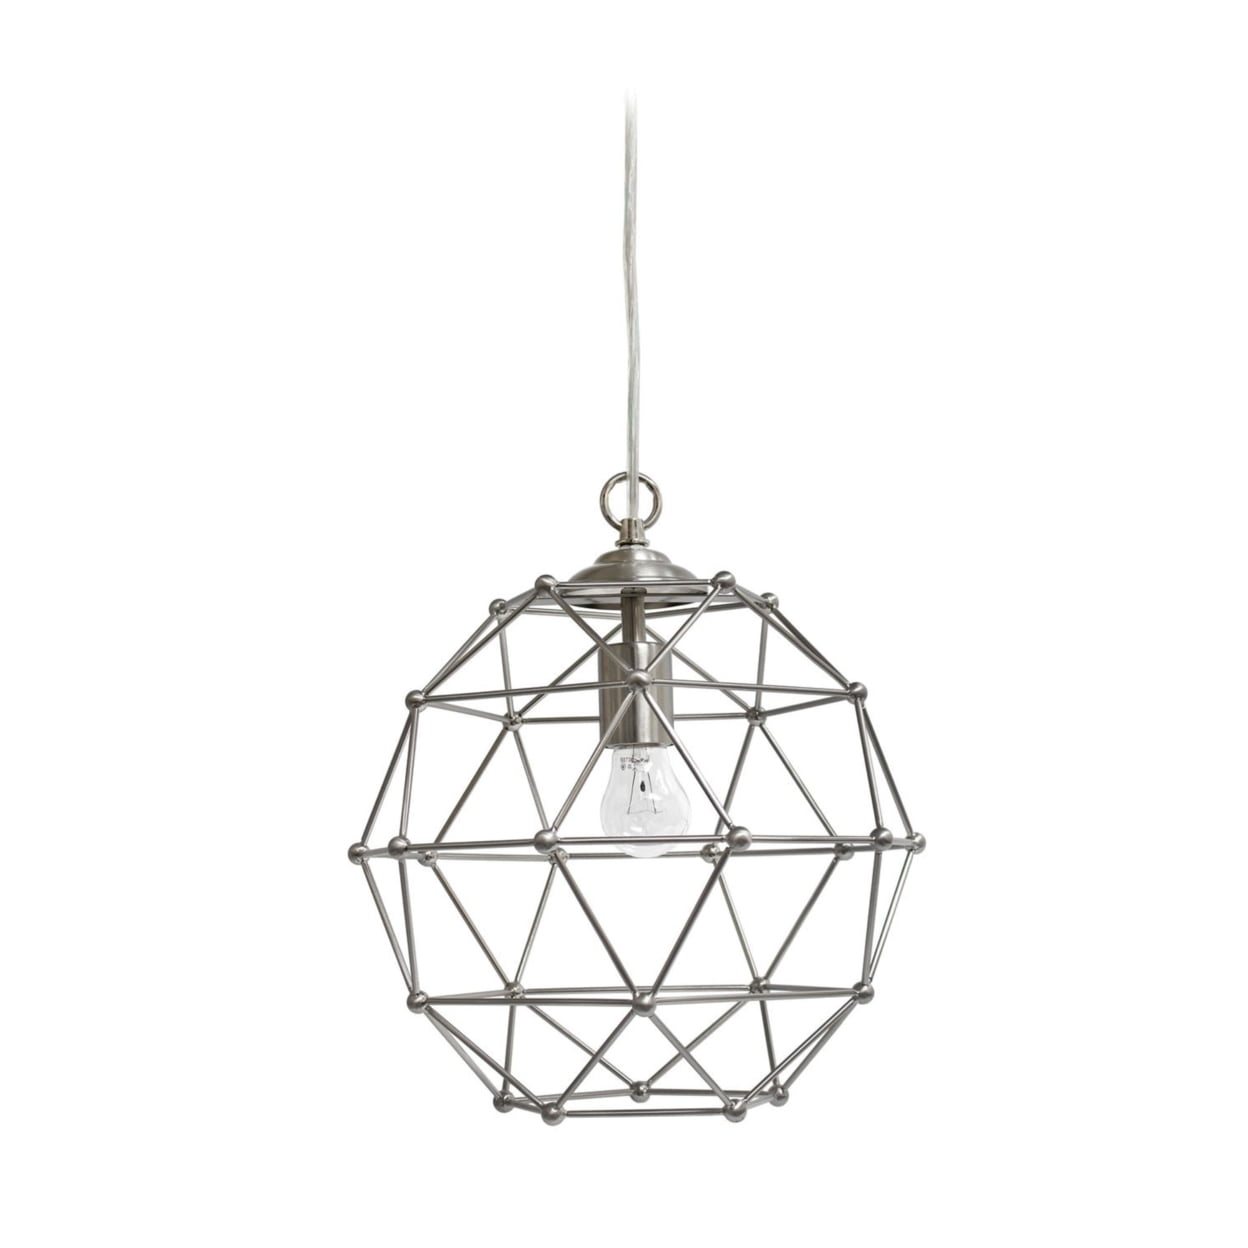 Elegant Designs Pt1006-bsn 1 Light Hexagon Industrial Rustic Pendant Light, Brushed Nickel